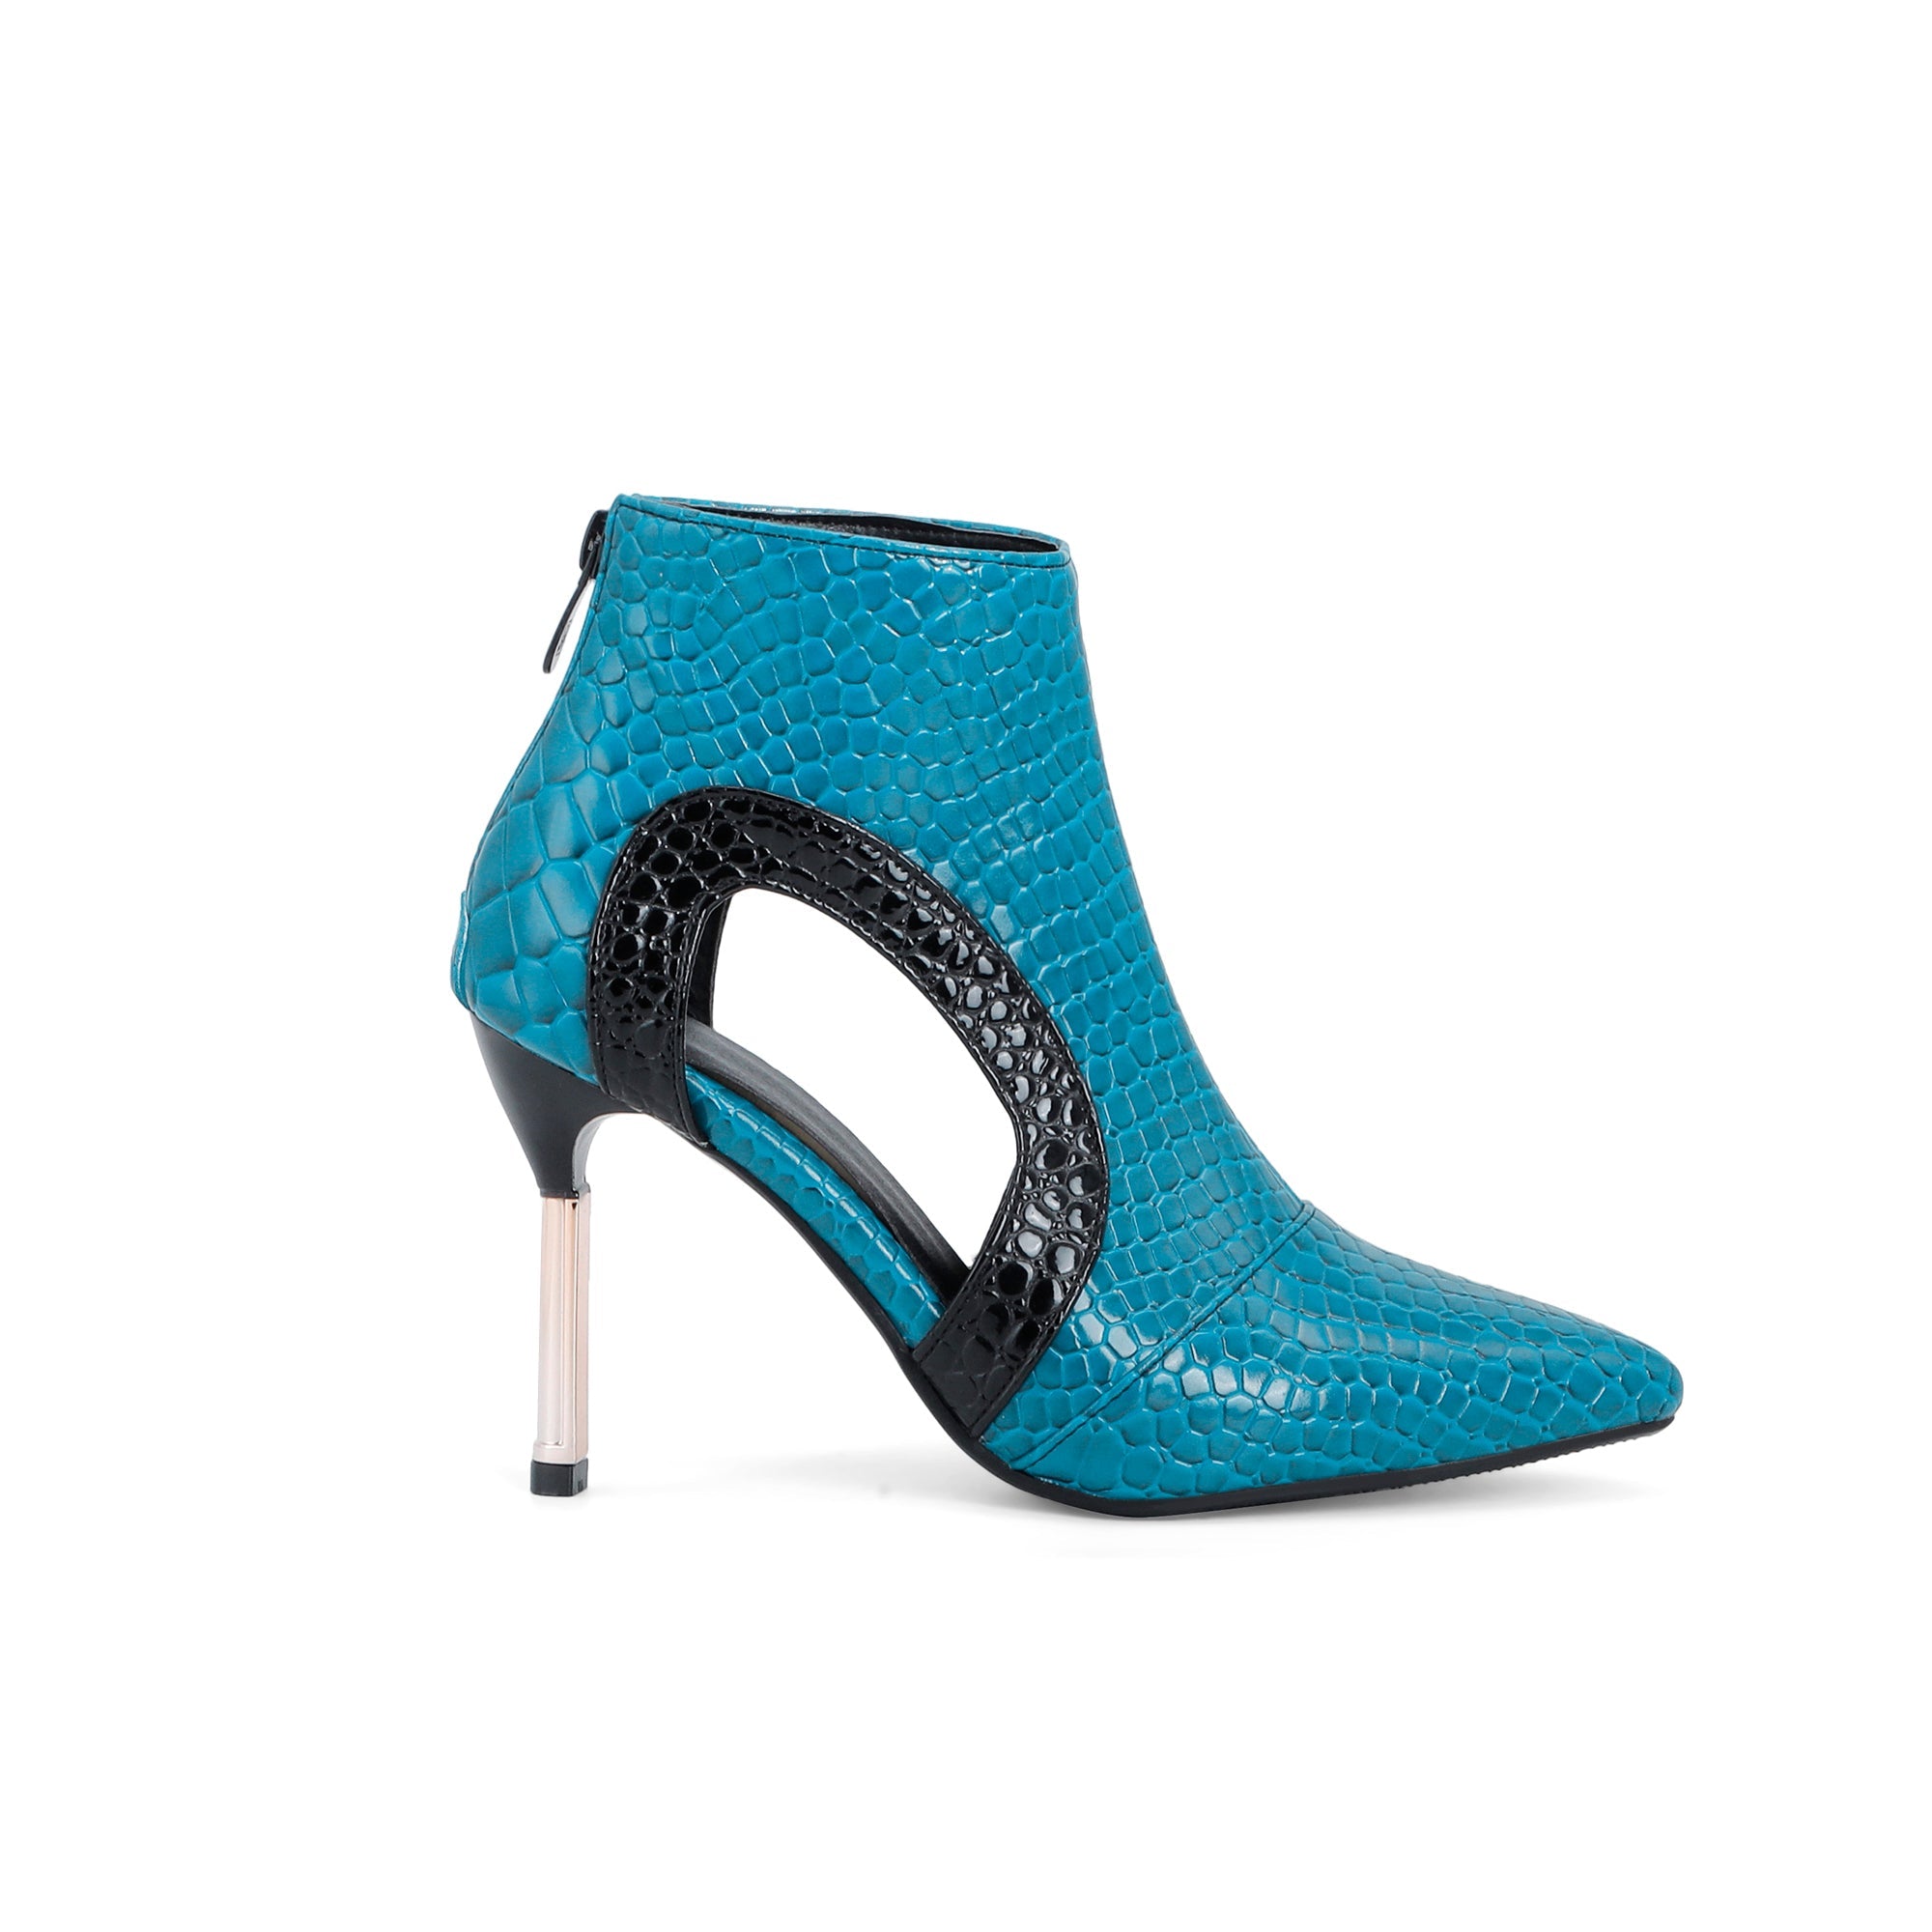 Bigsizeheels Msie magazine stiletto sandals - Blue freeshipping - bigsizeheel®-size5-size15 -All Plus Sizes Available!